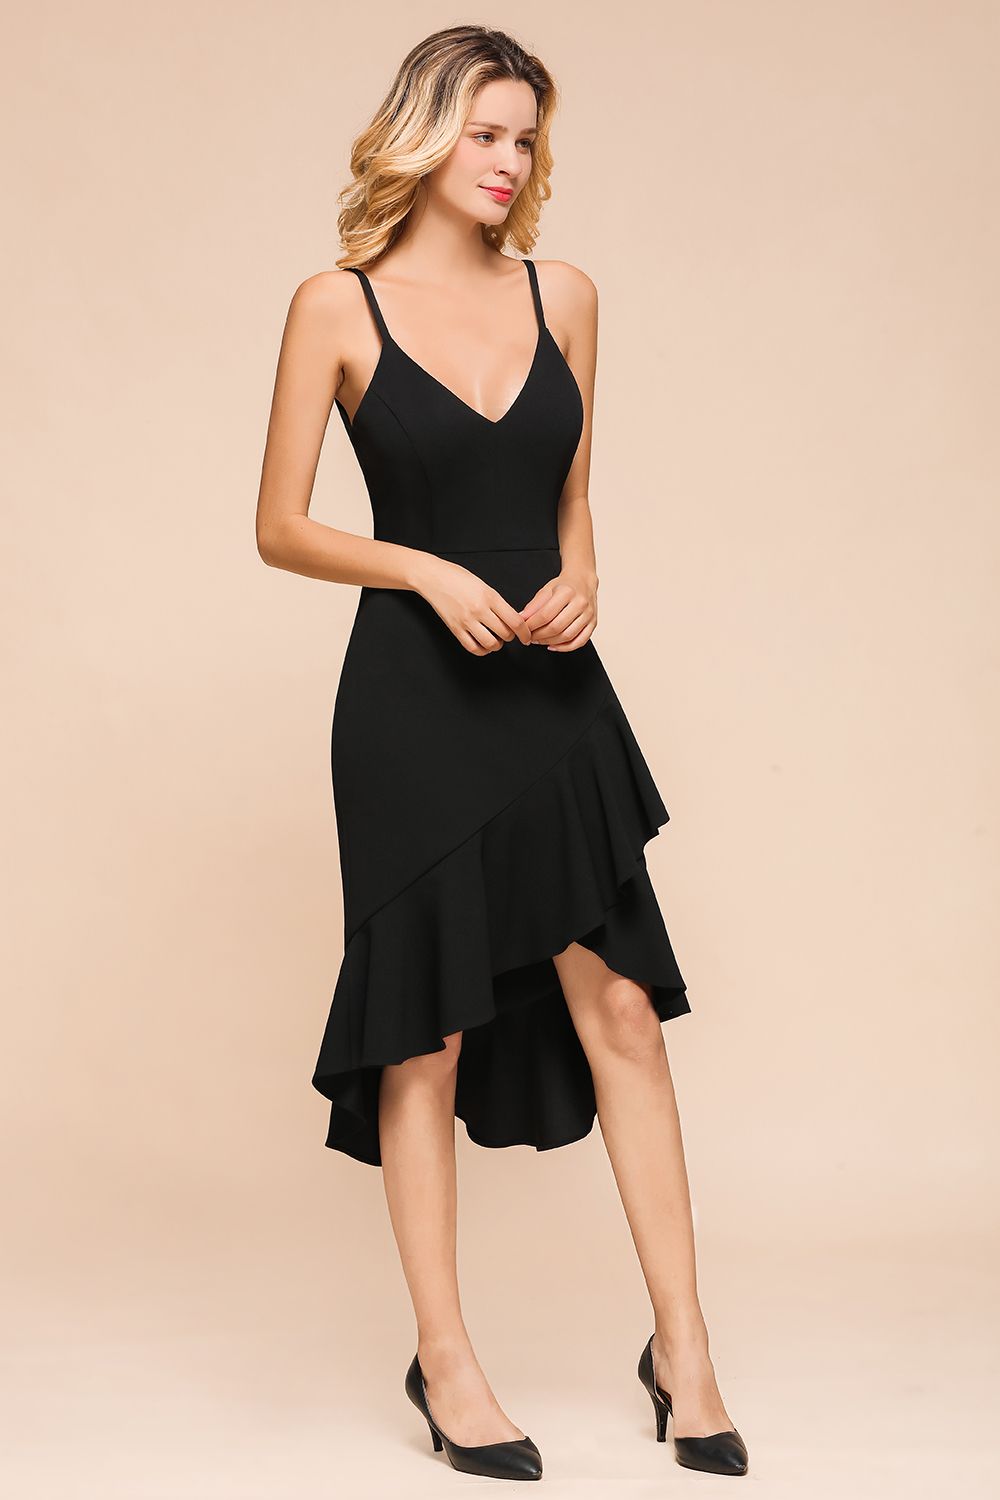 Sexy Black Spaghetti-Strap Short Prom Dress Mermaid Ruffles Homecoming Dress